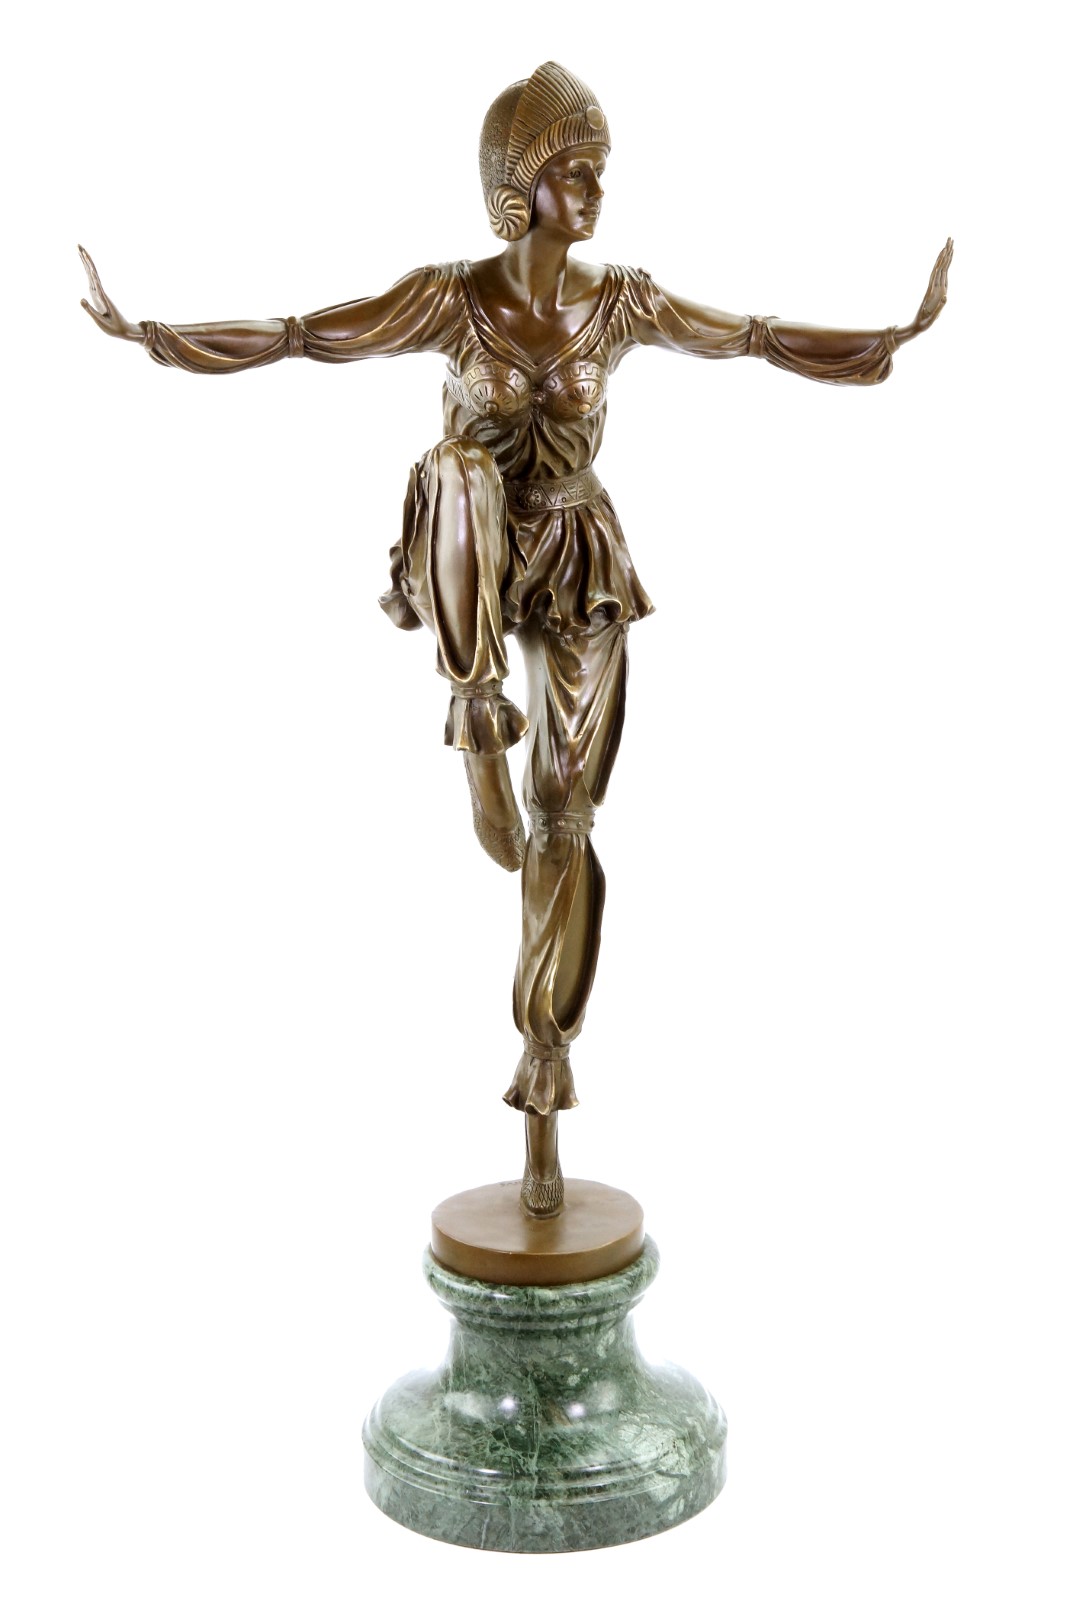 Chiparus Hand Made Statue Signed D.H Art Deco Dancer Large Bronze Sculpture 